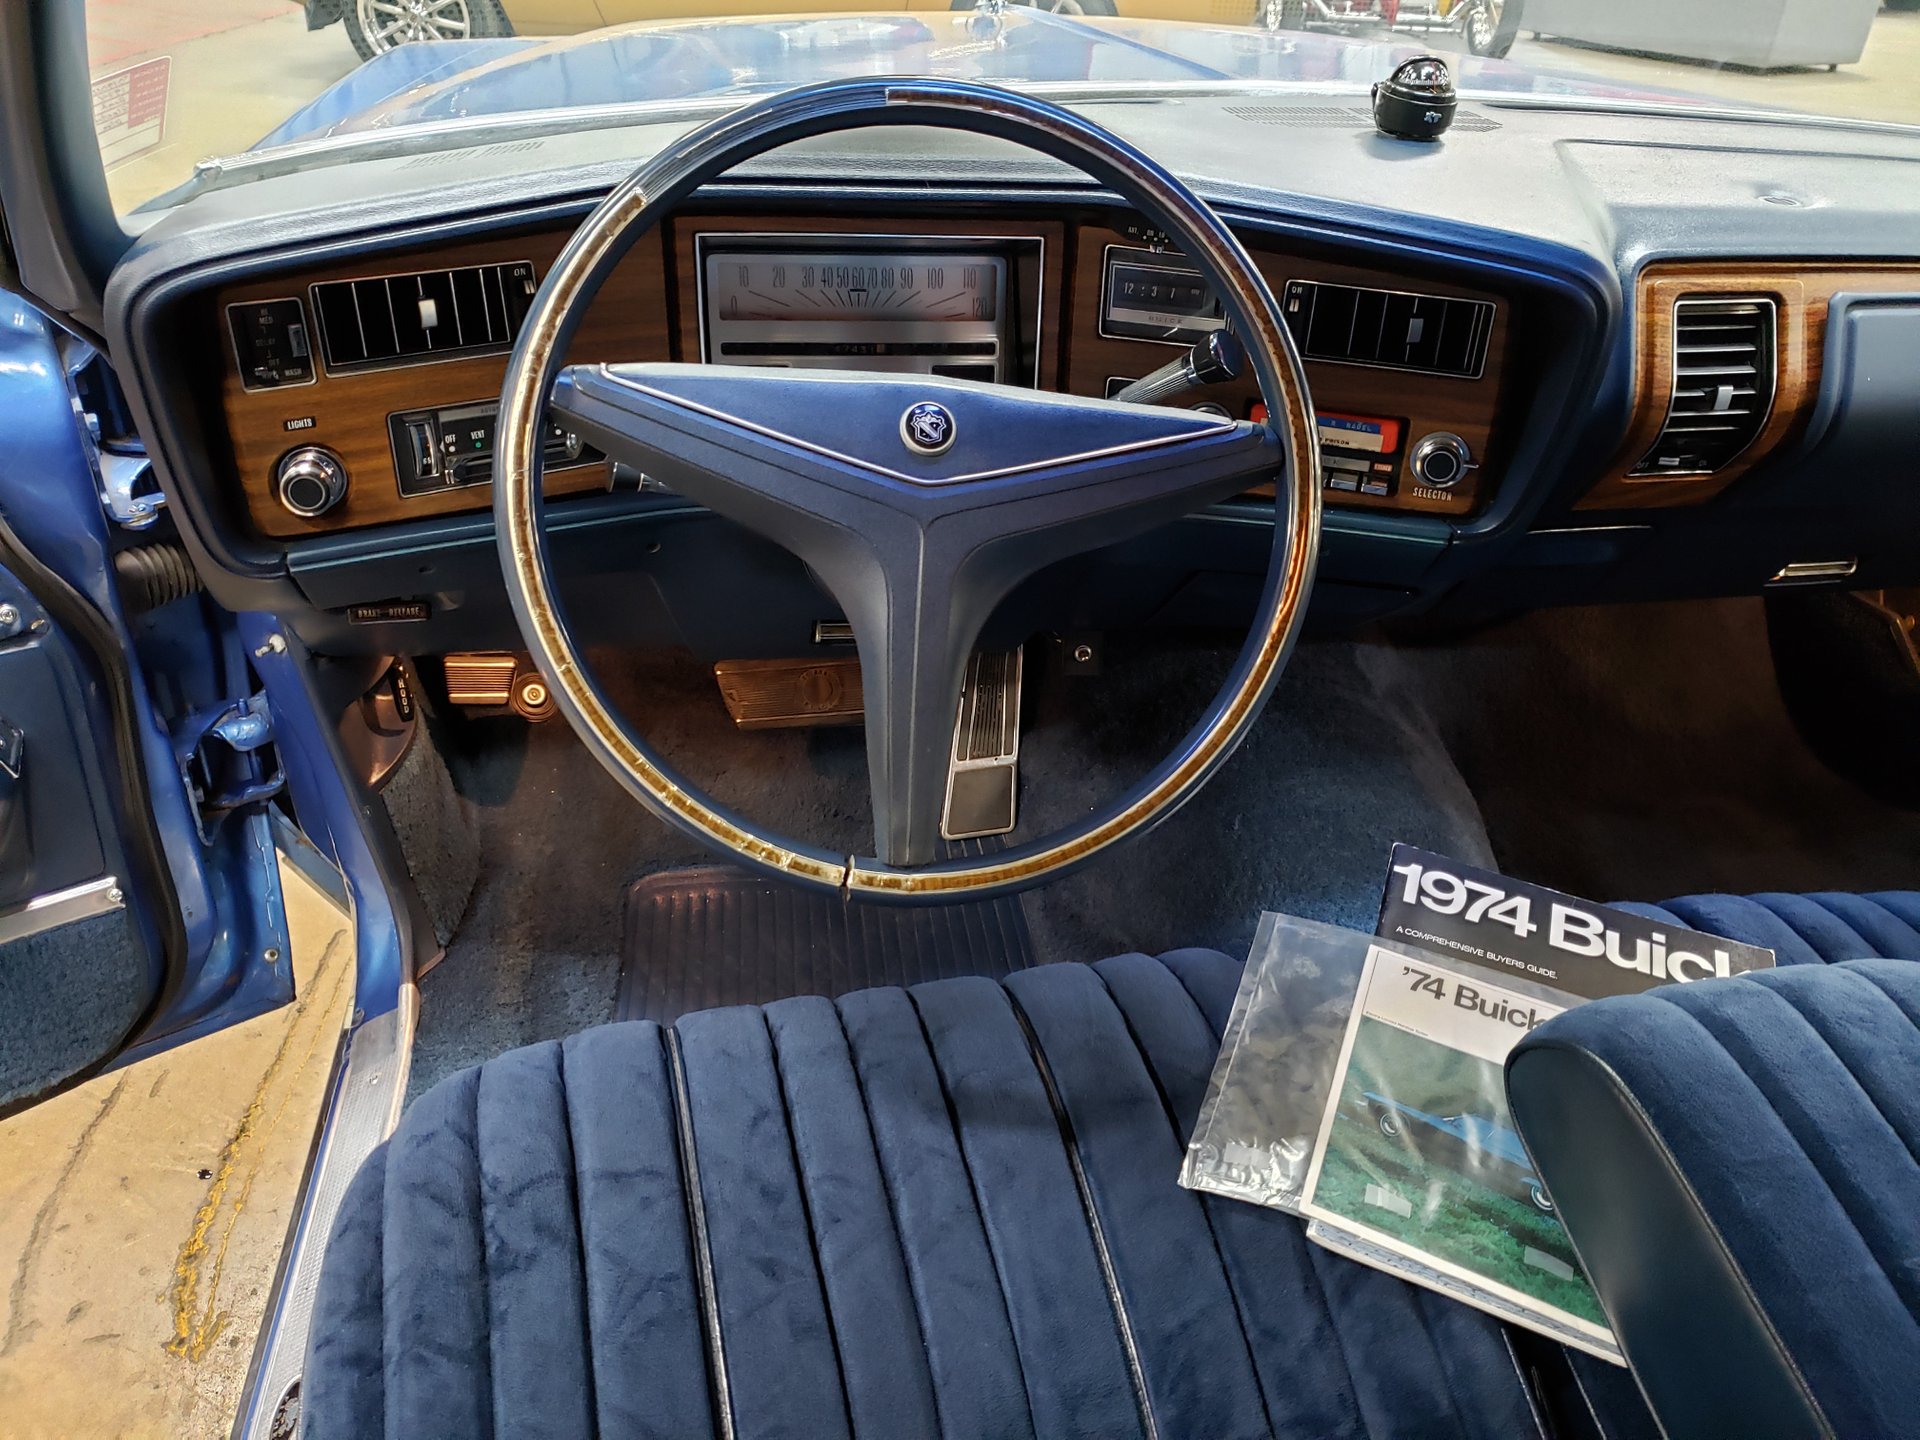 1971 1976 Buick Electra 225 Interior 1